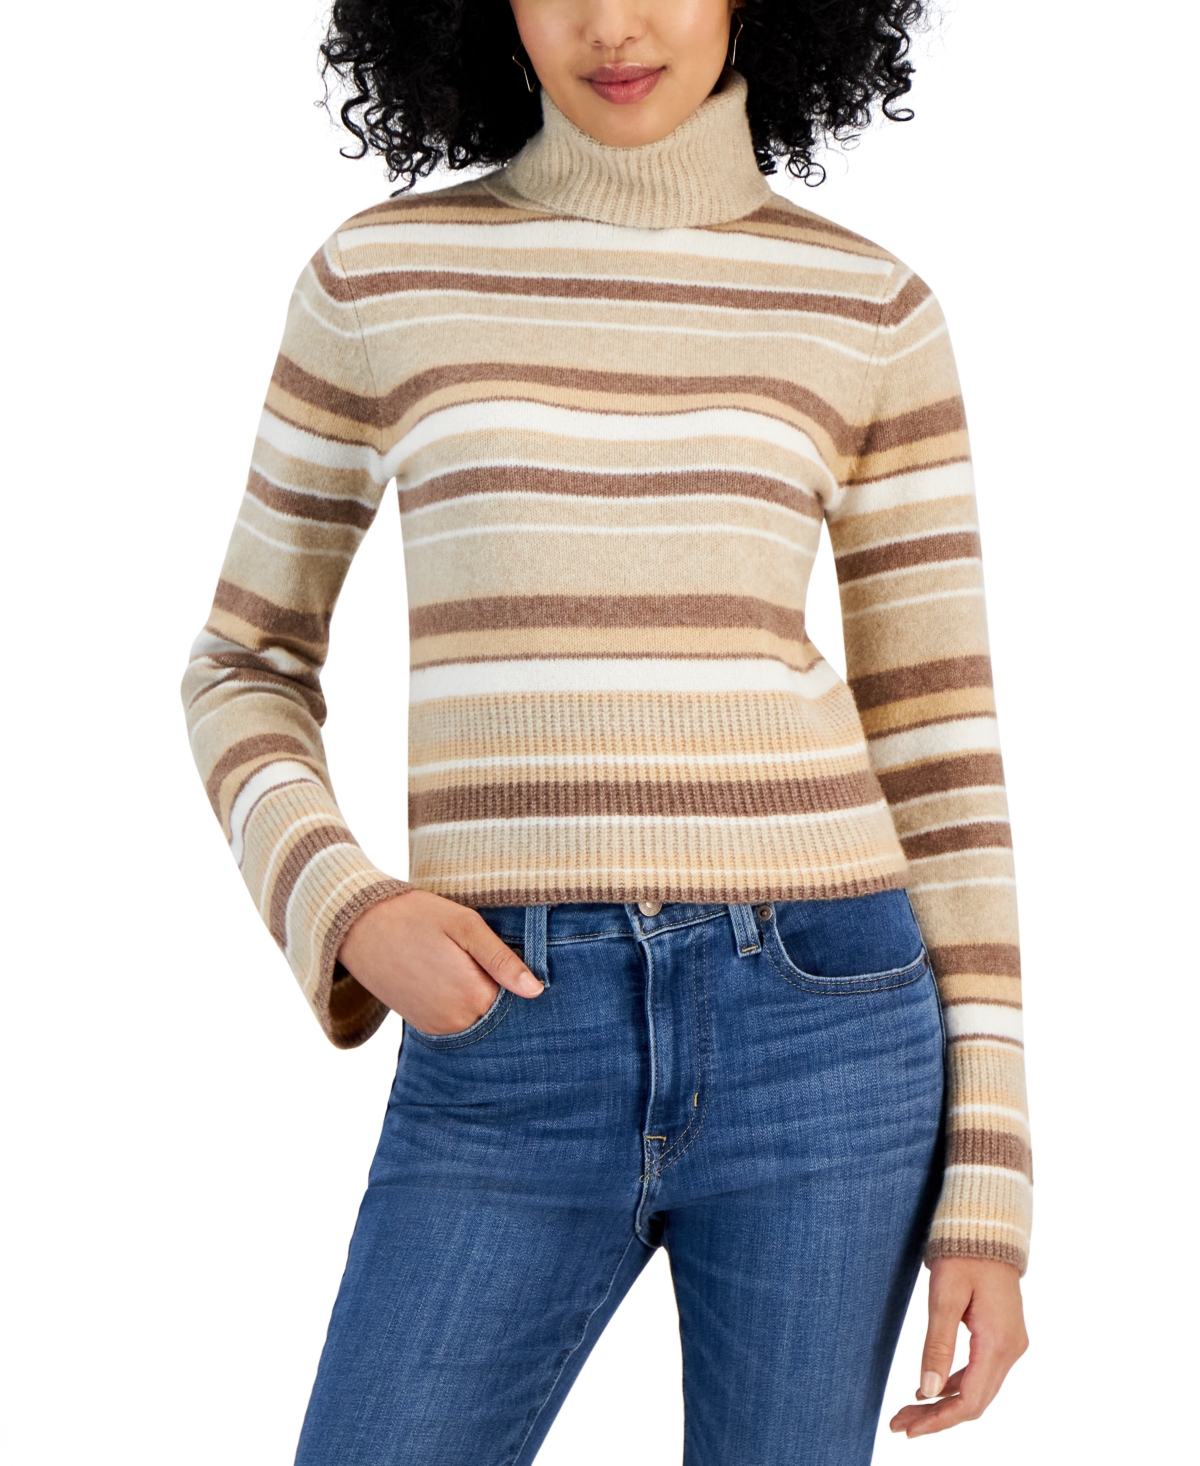 Juniors' Striped Turtleneck Sweater - Tan Combo